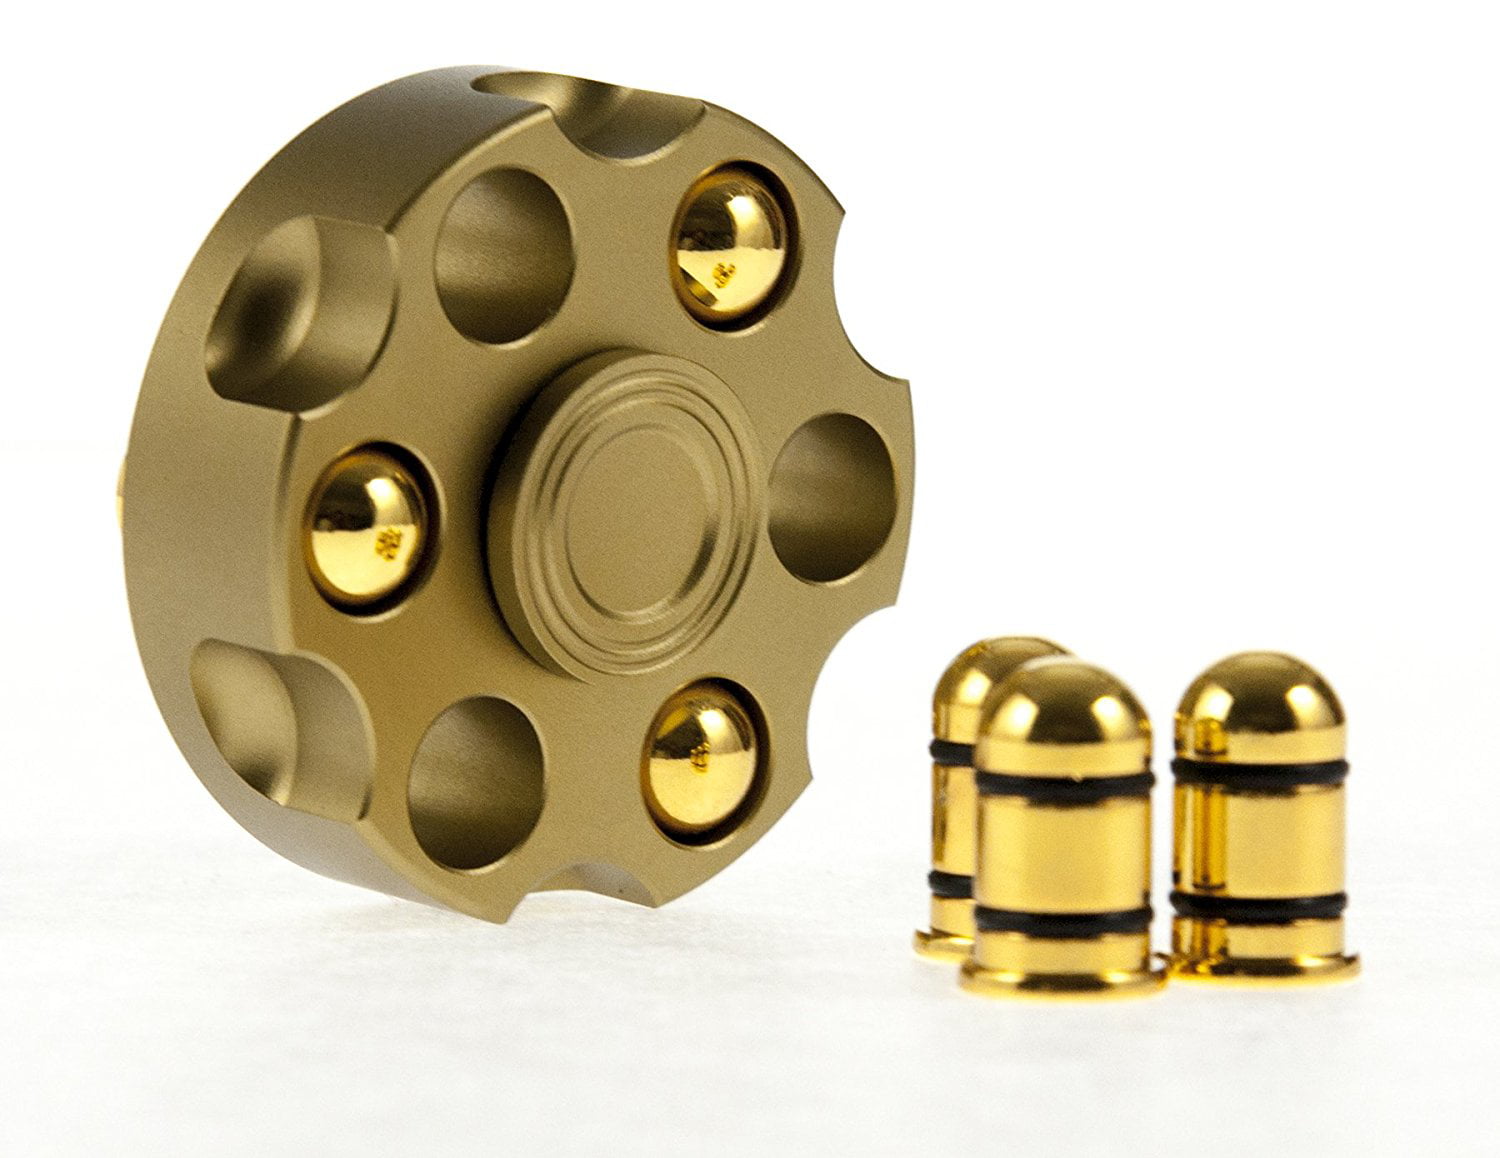 Golden Bullet Six Shooter EDC Metal Fidget Spinner - Walmart.com ...